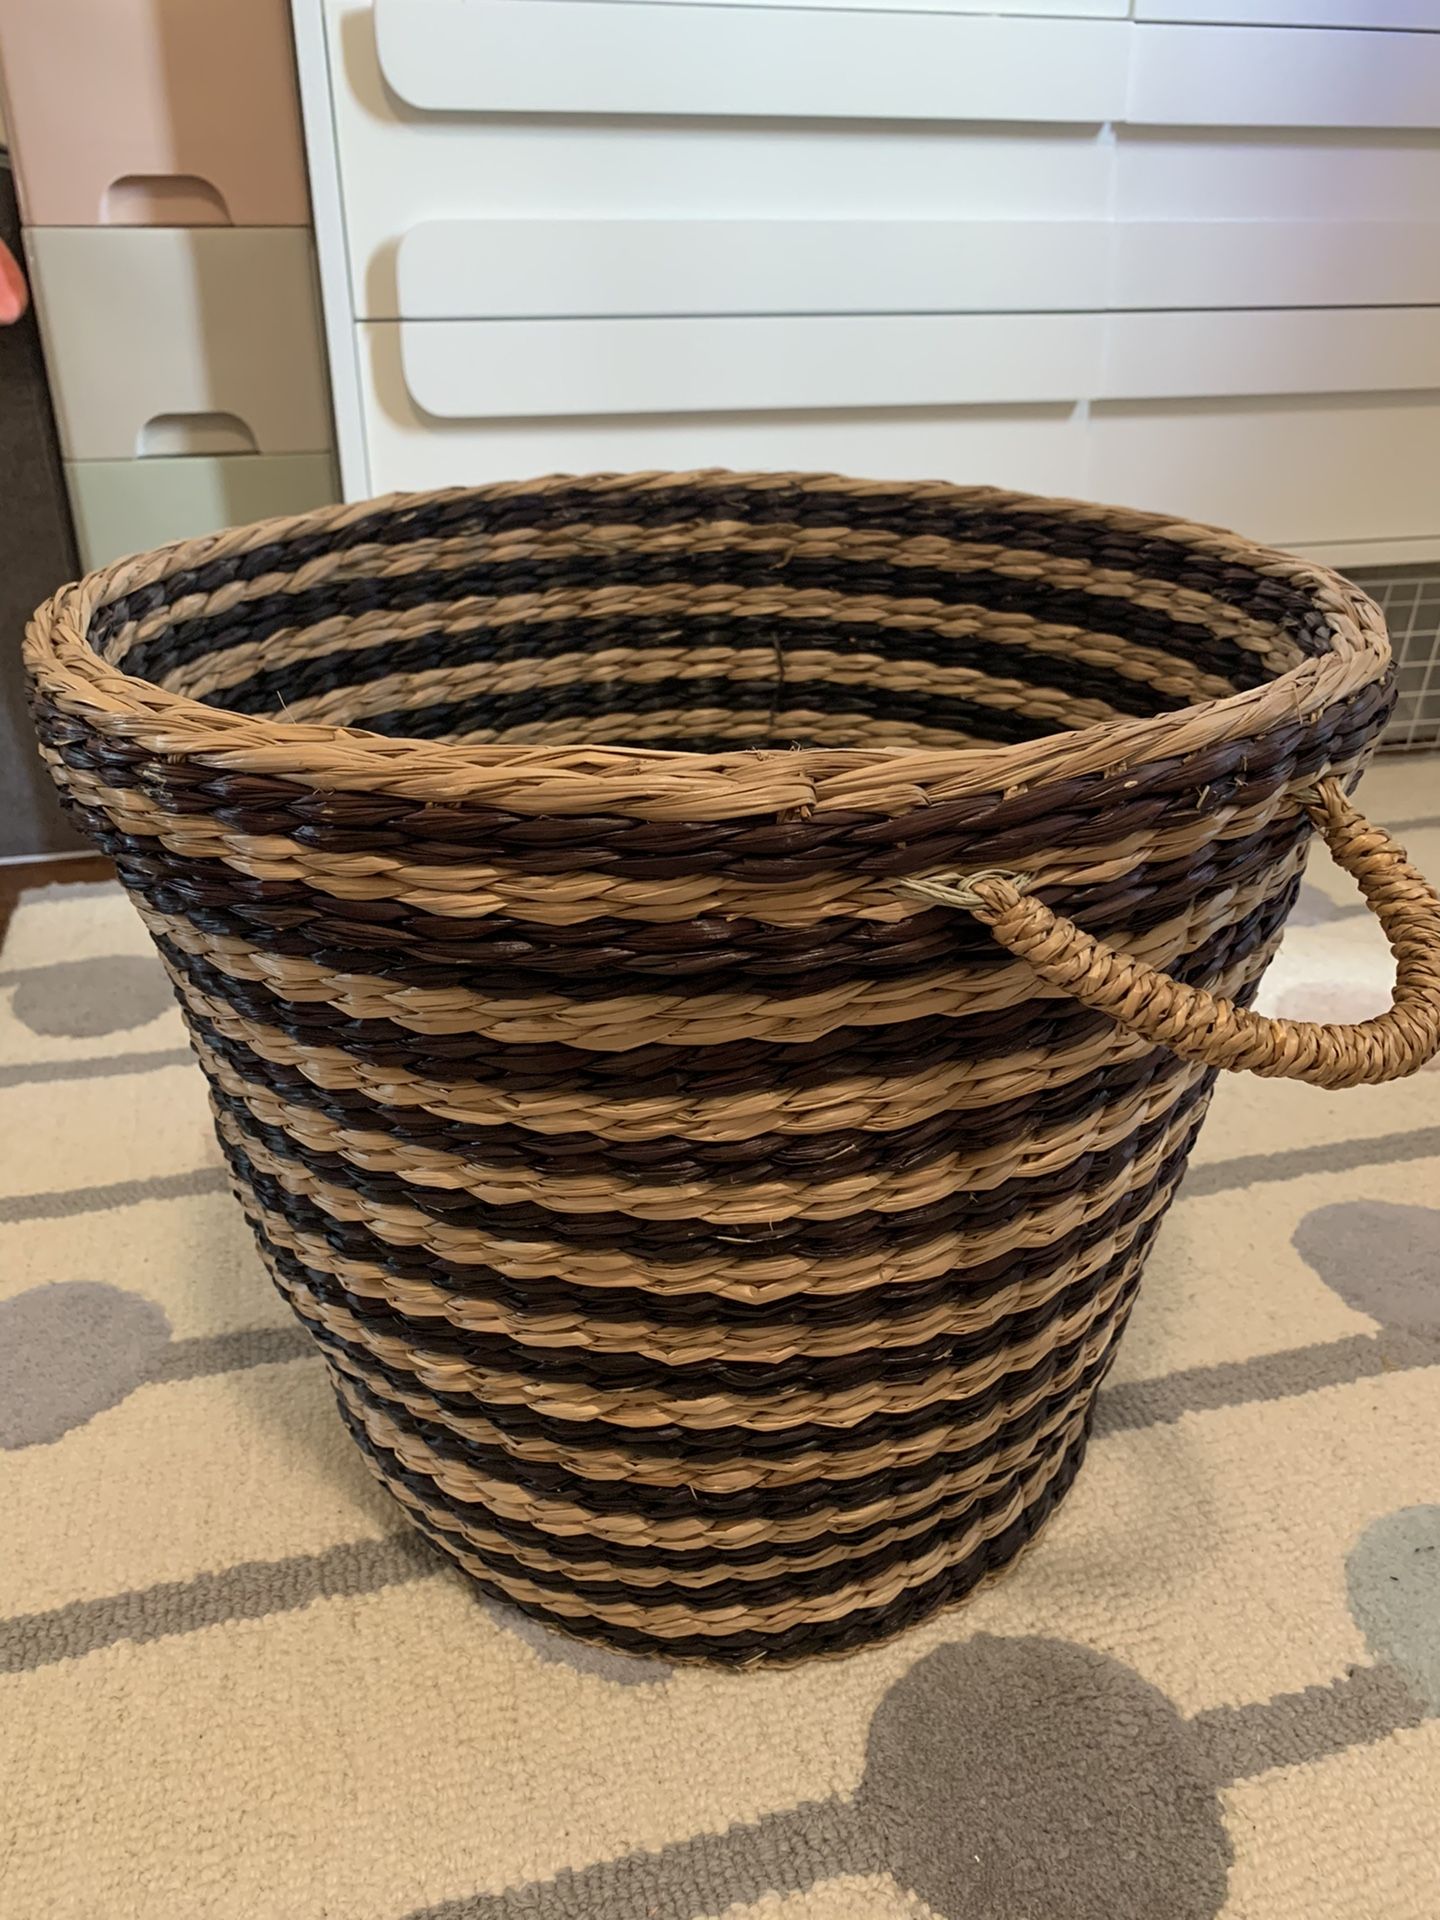 Basket and Yarn